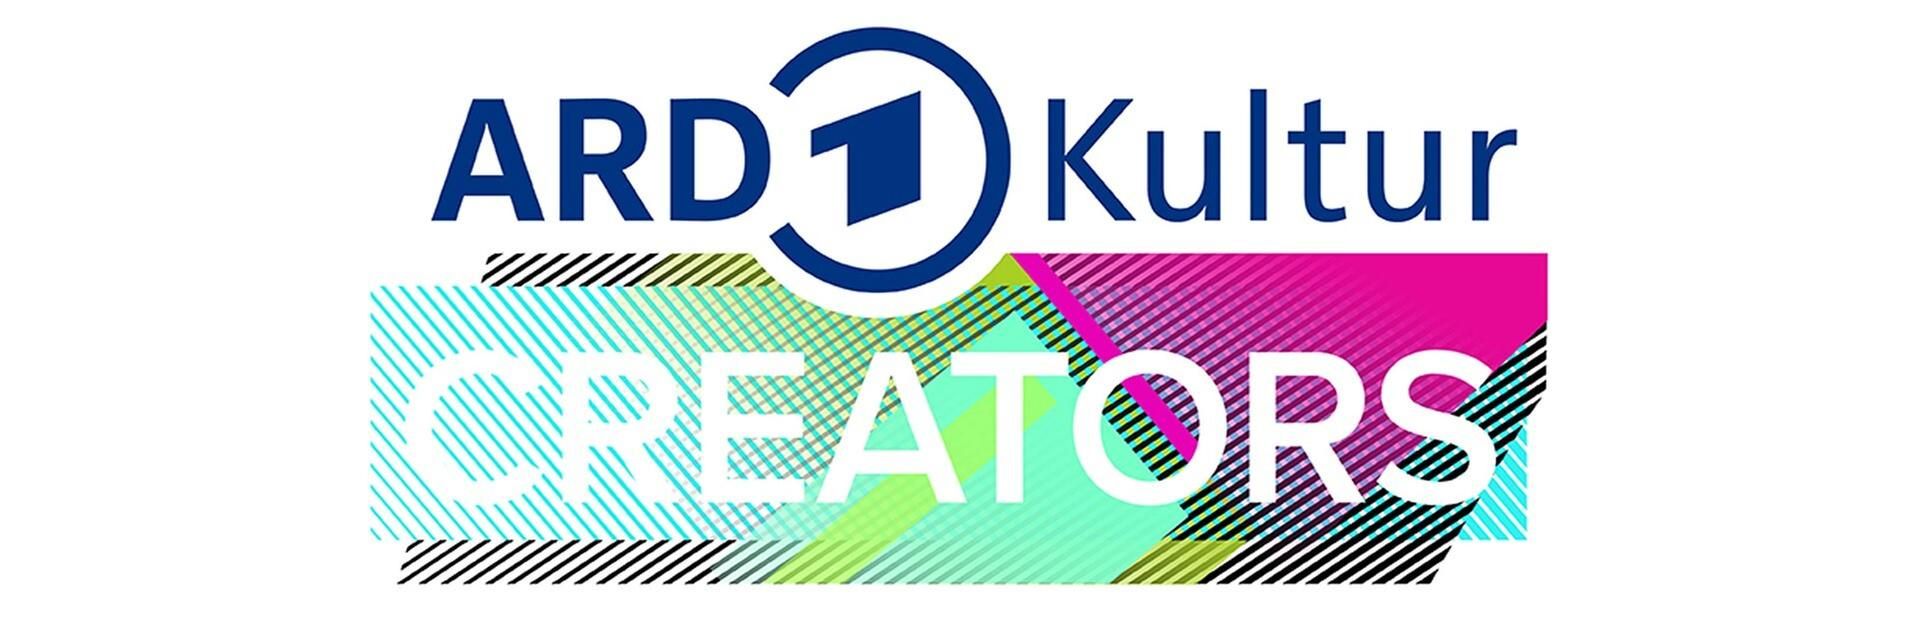 Neue Ideen, neue Formate: Creators-Formate bei ARD Kultur